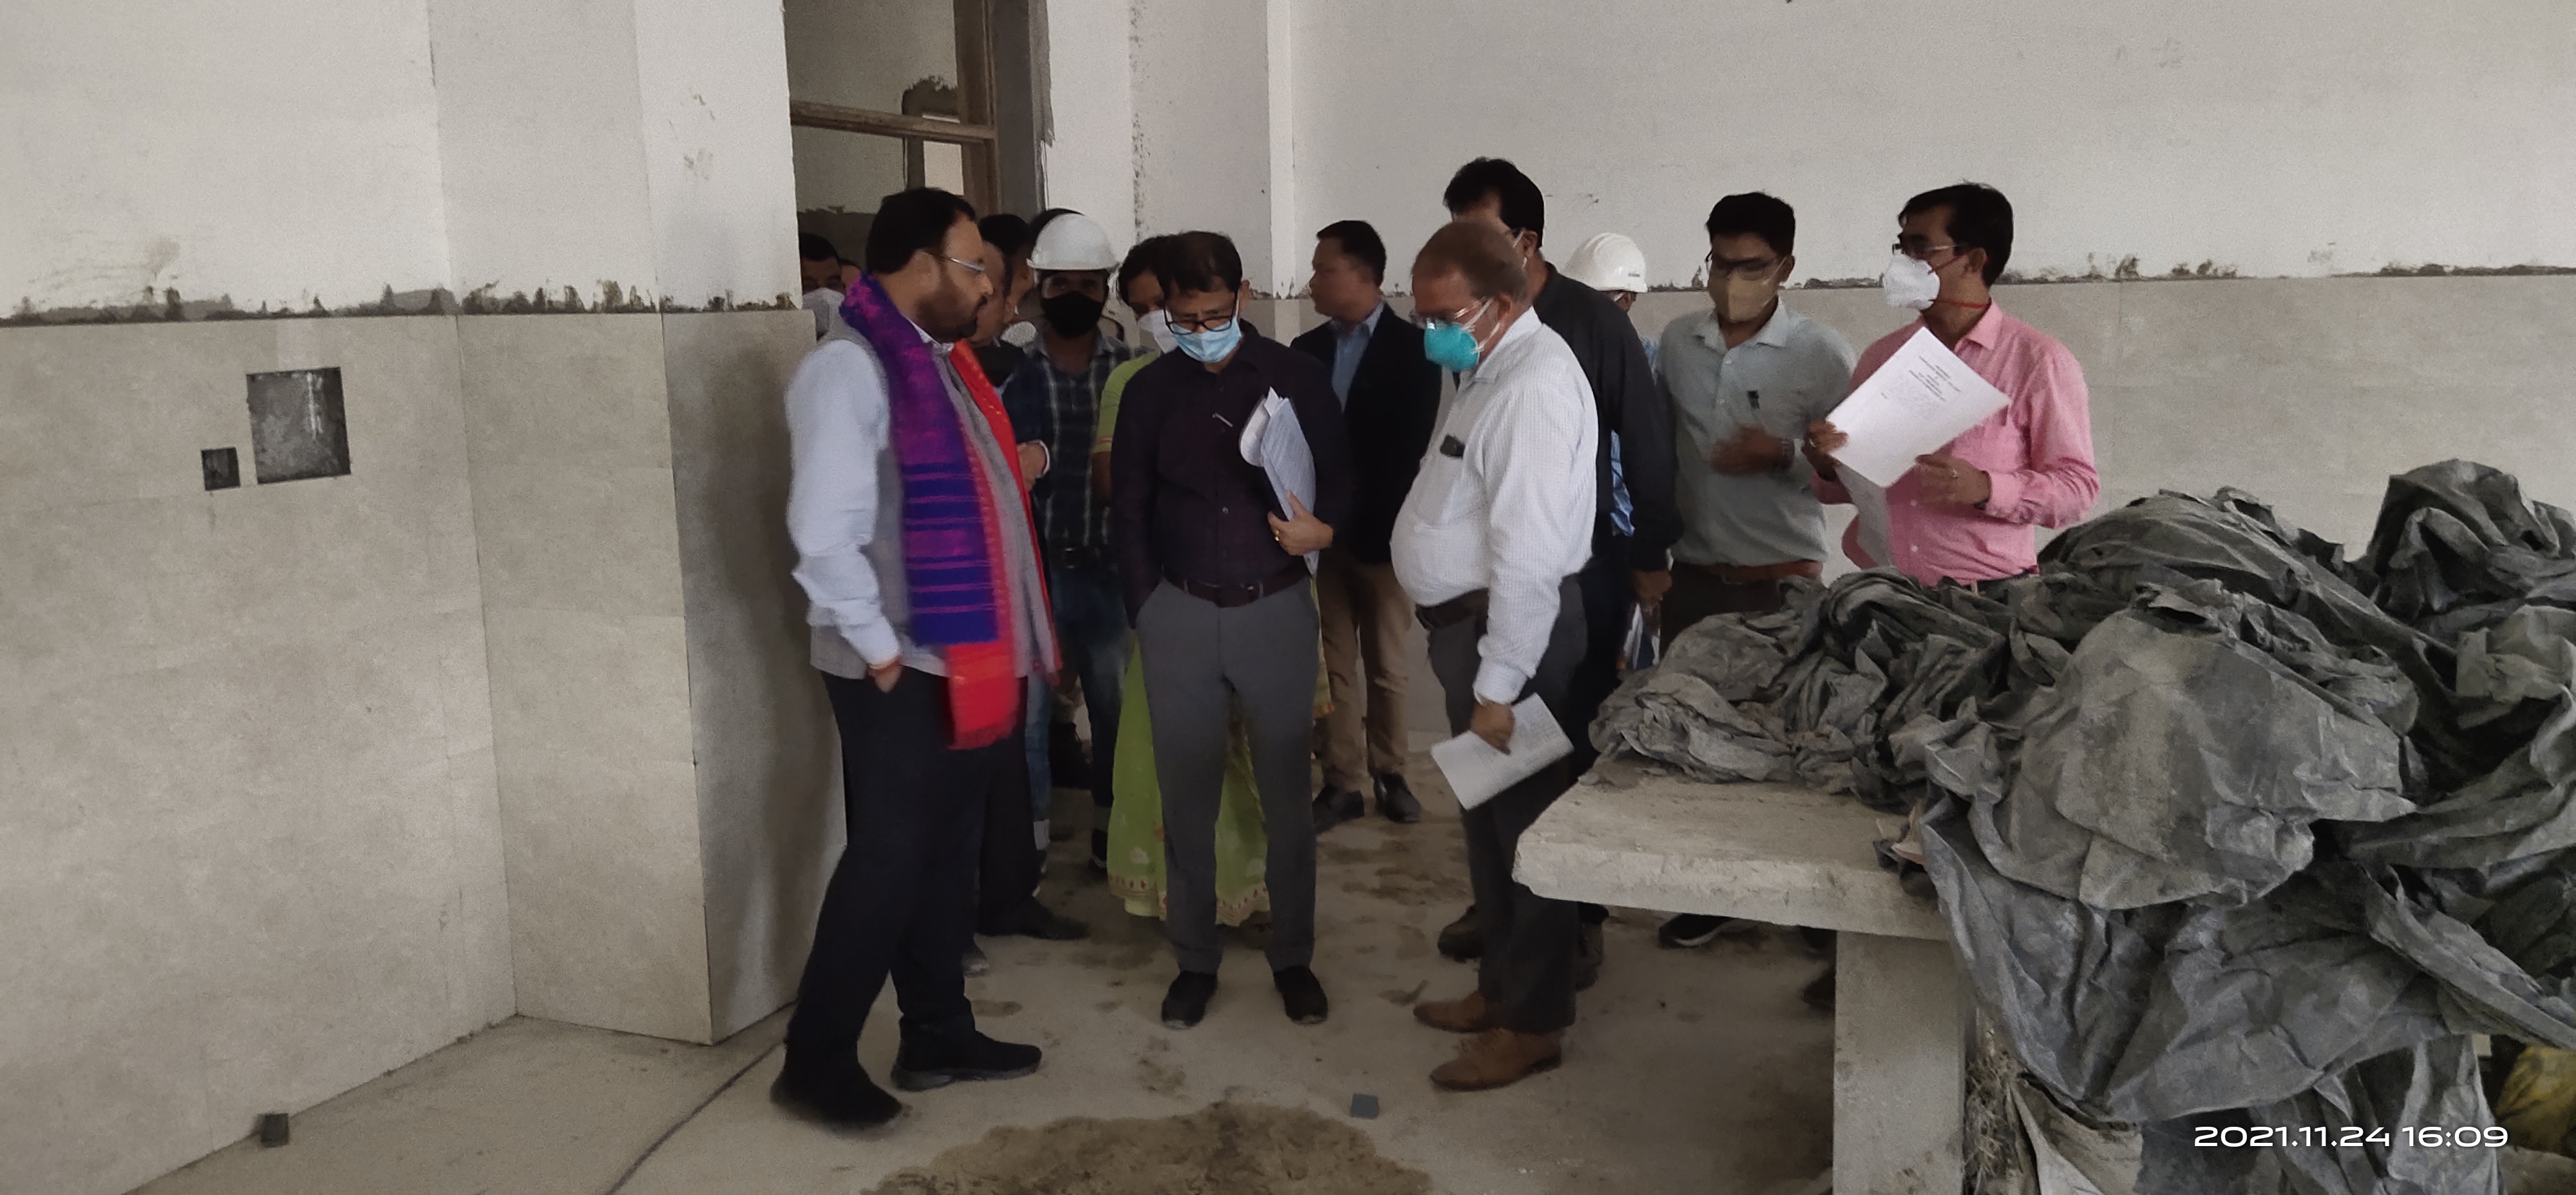 Health Minister Keshab Mahanta visits construction site of Kokrajhar Medical College and Hospital